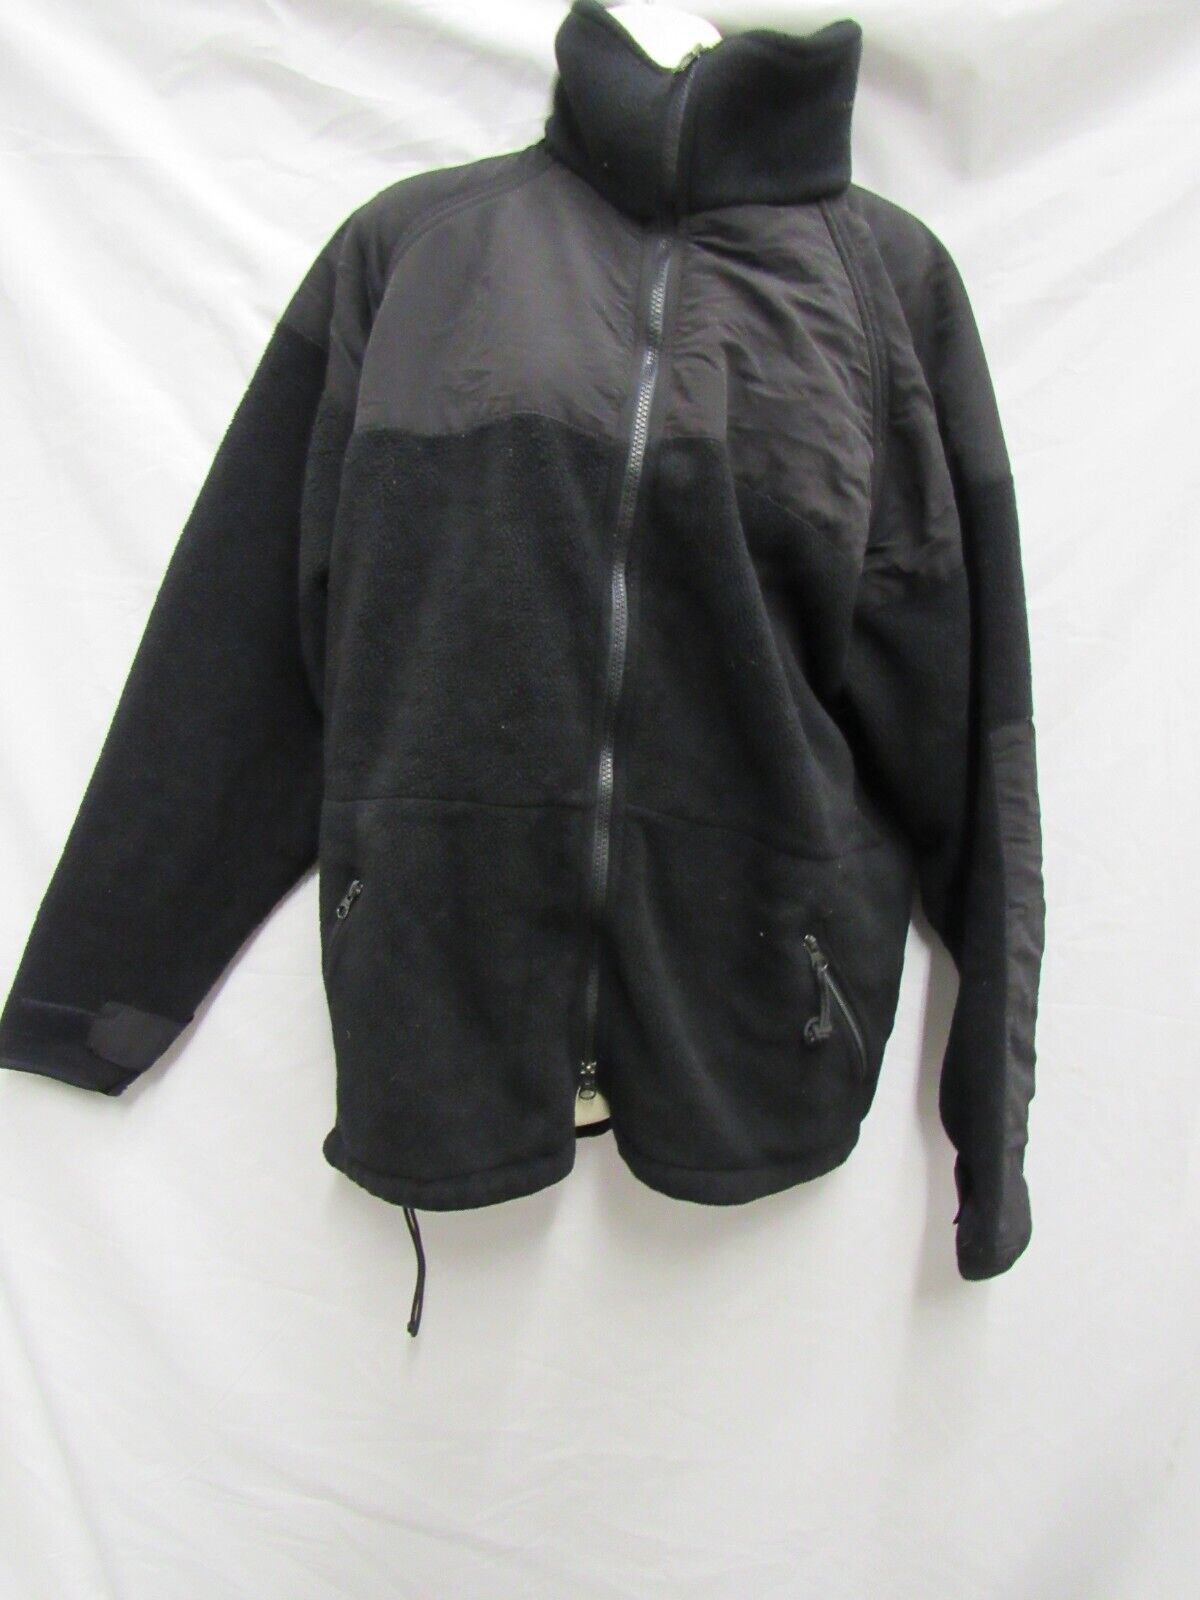 Peckham SPEAR Military Issue Black Polartec 300 Fleece Jacket Large